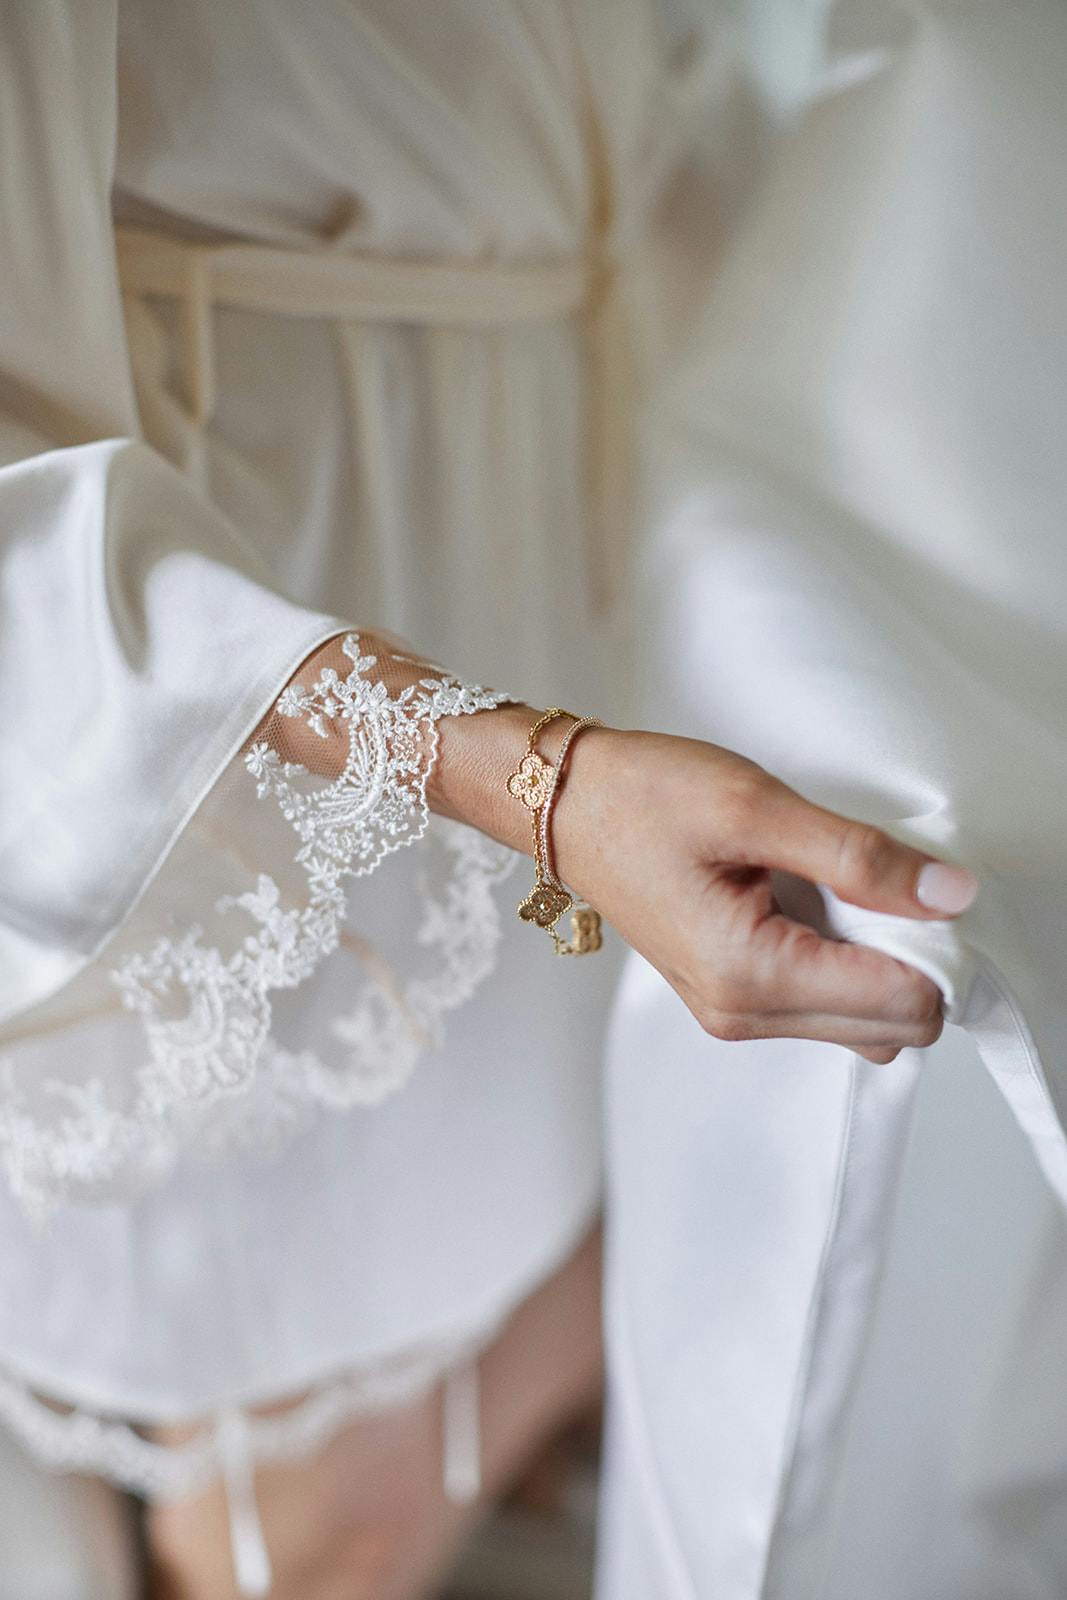 Bride wearing bracelet and holding wedding dress